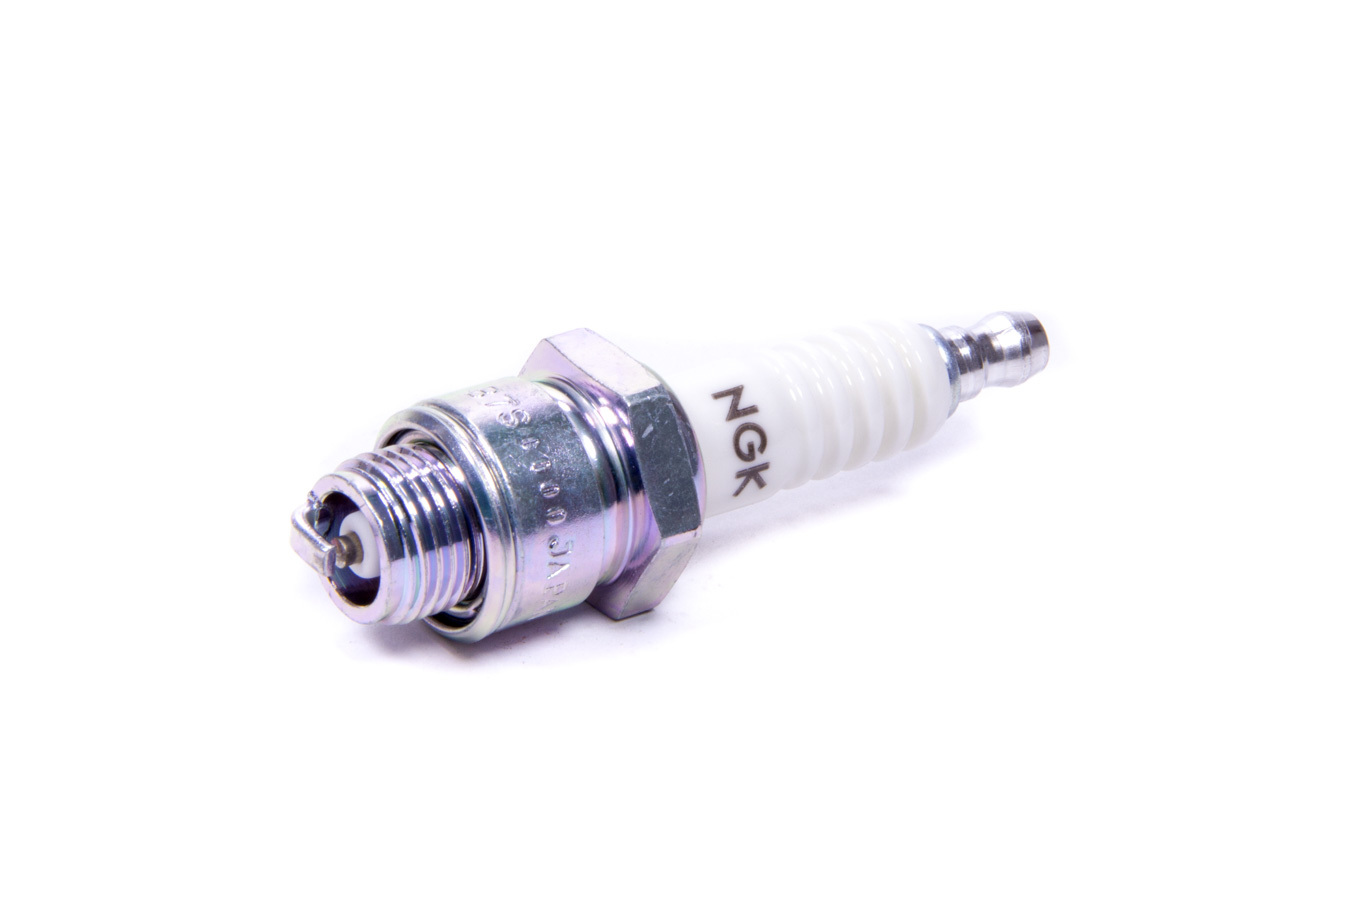 NGK B7S Spark Plug, NGK Standard, 14 mm Thread, 0.375 in Reach, Gasket Seat, Stock Number 3710, Non-Resistor, Each